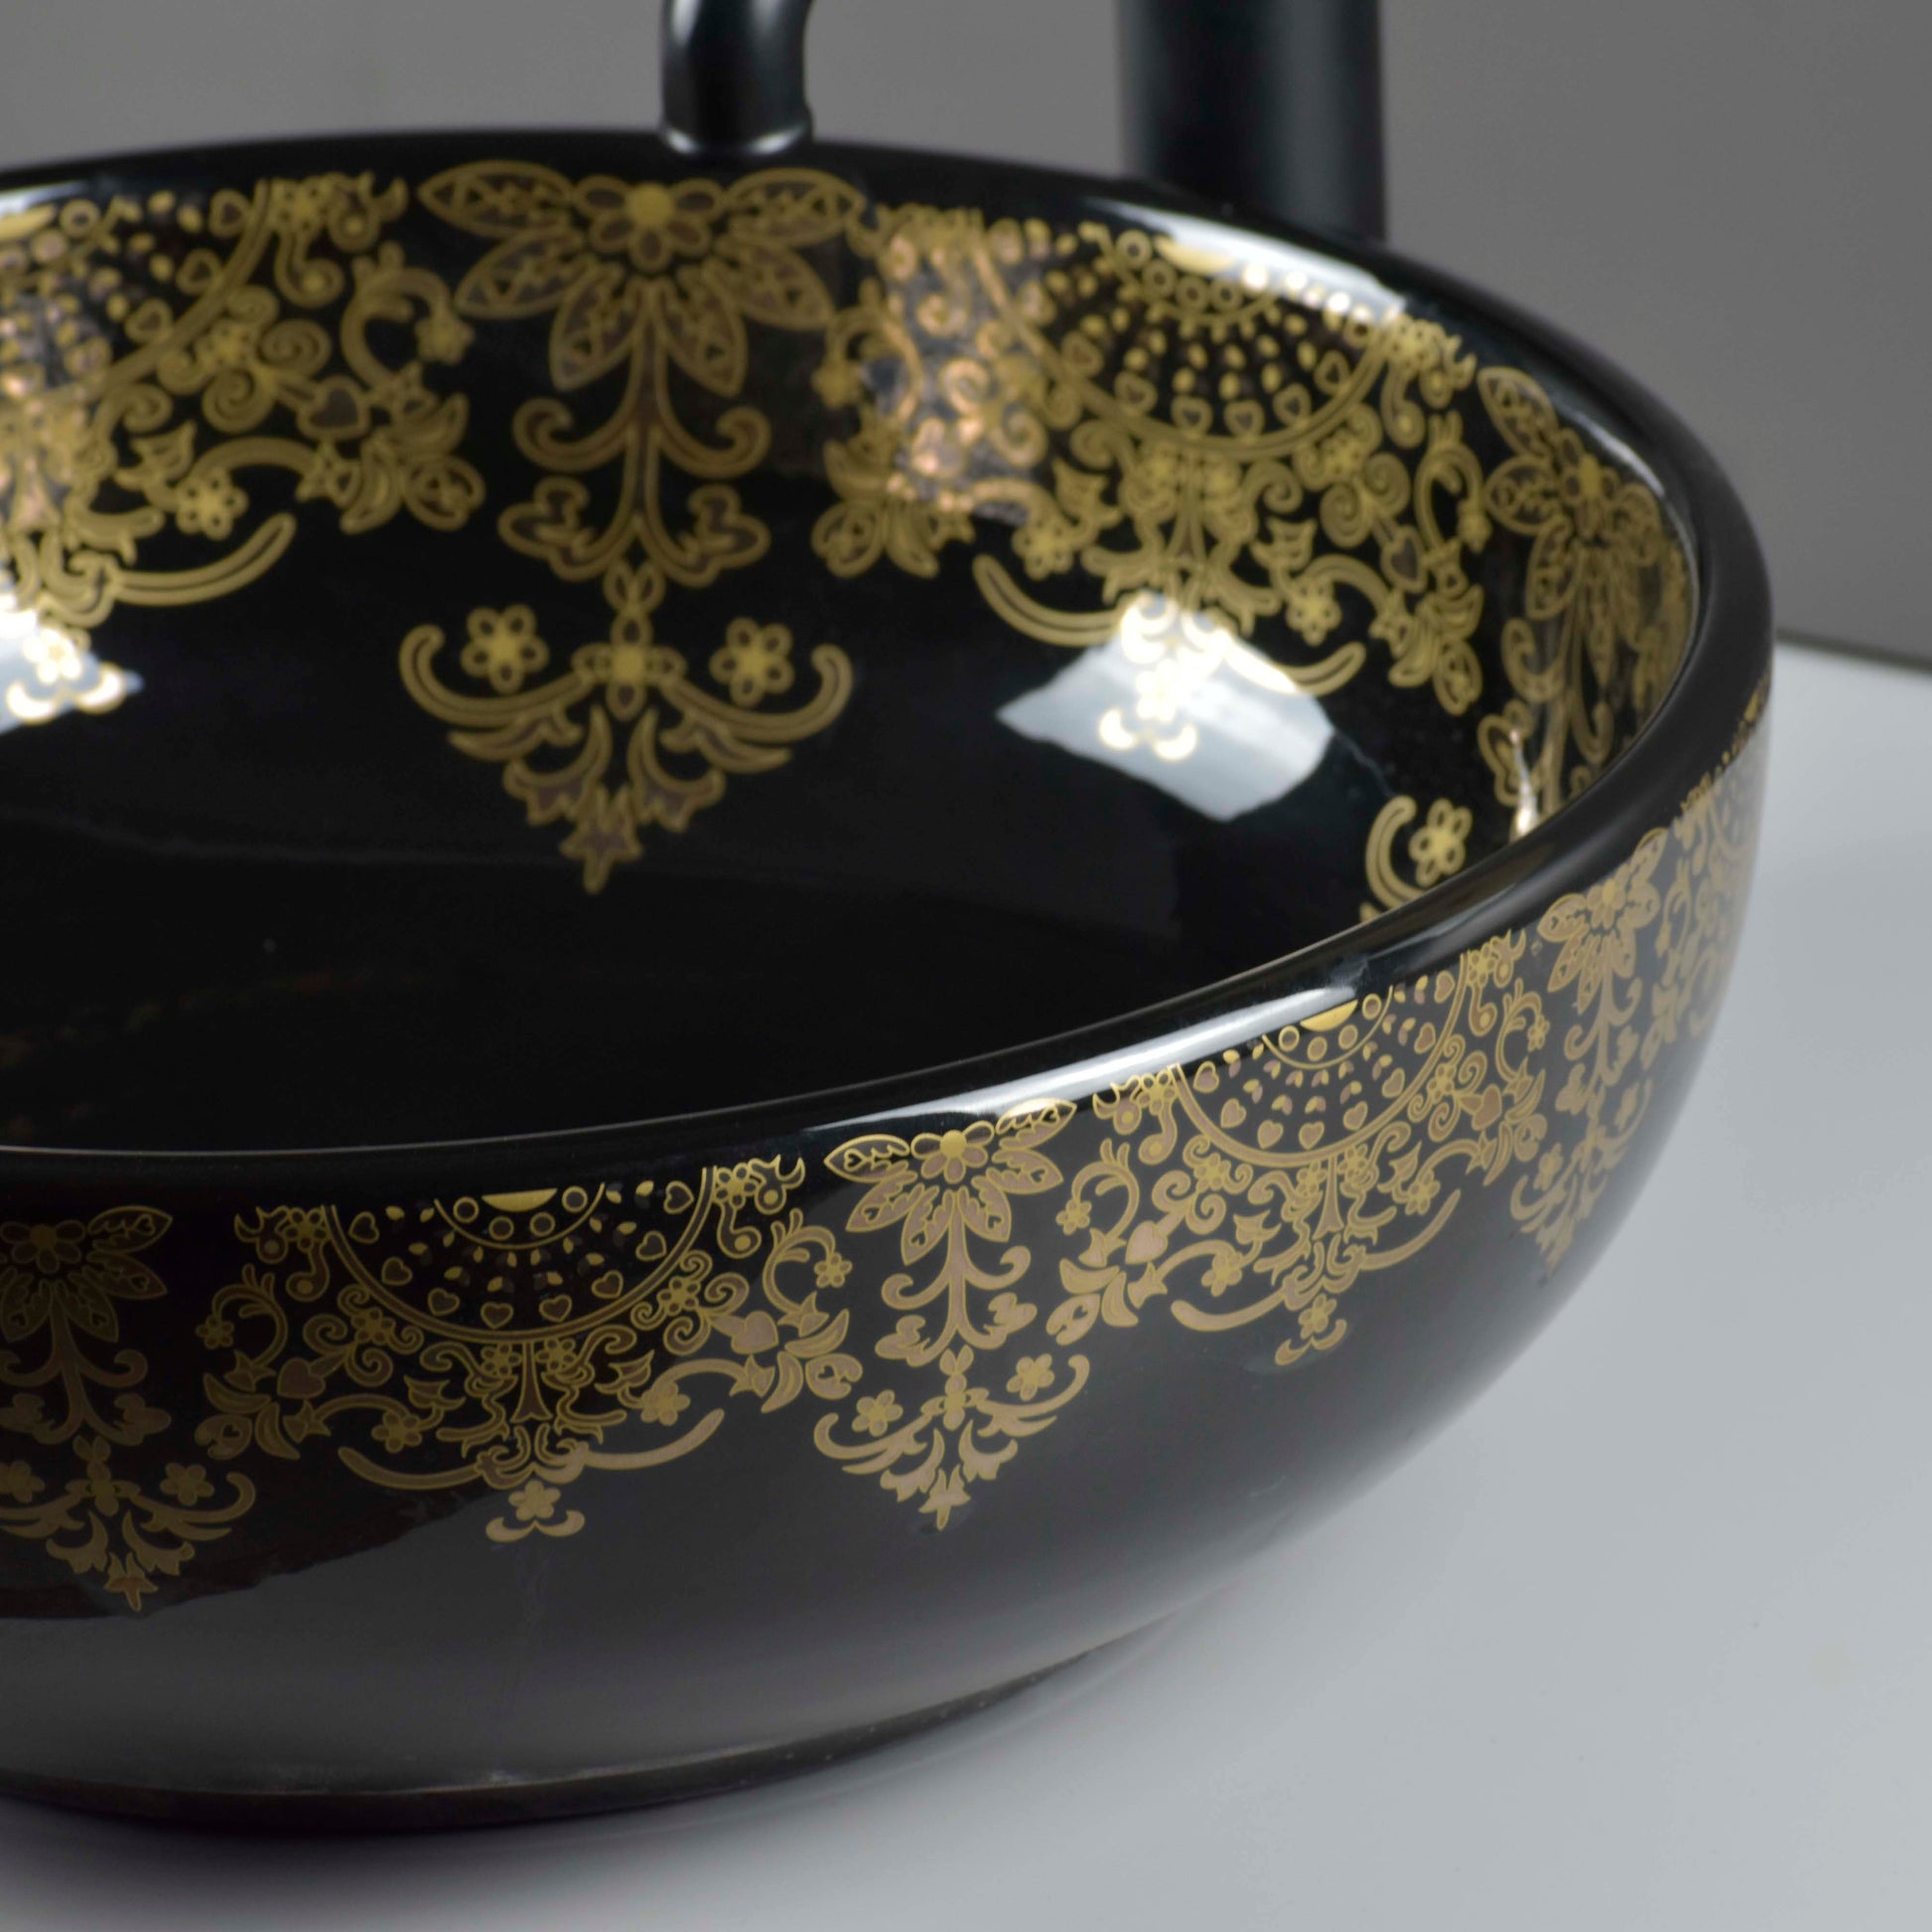 InArt Ceramic Round Wash Basin | Black Mexican 3 | 41D x 41W x 14H cm | European Elegance - InArt-Studio